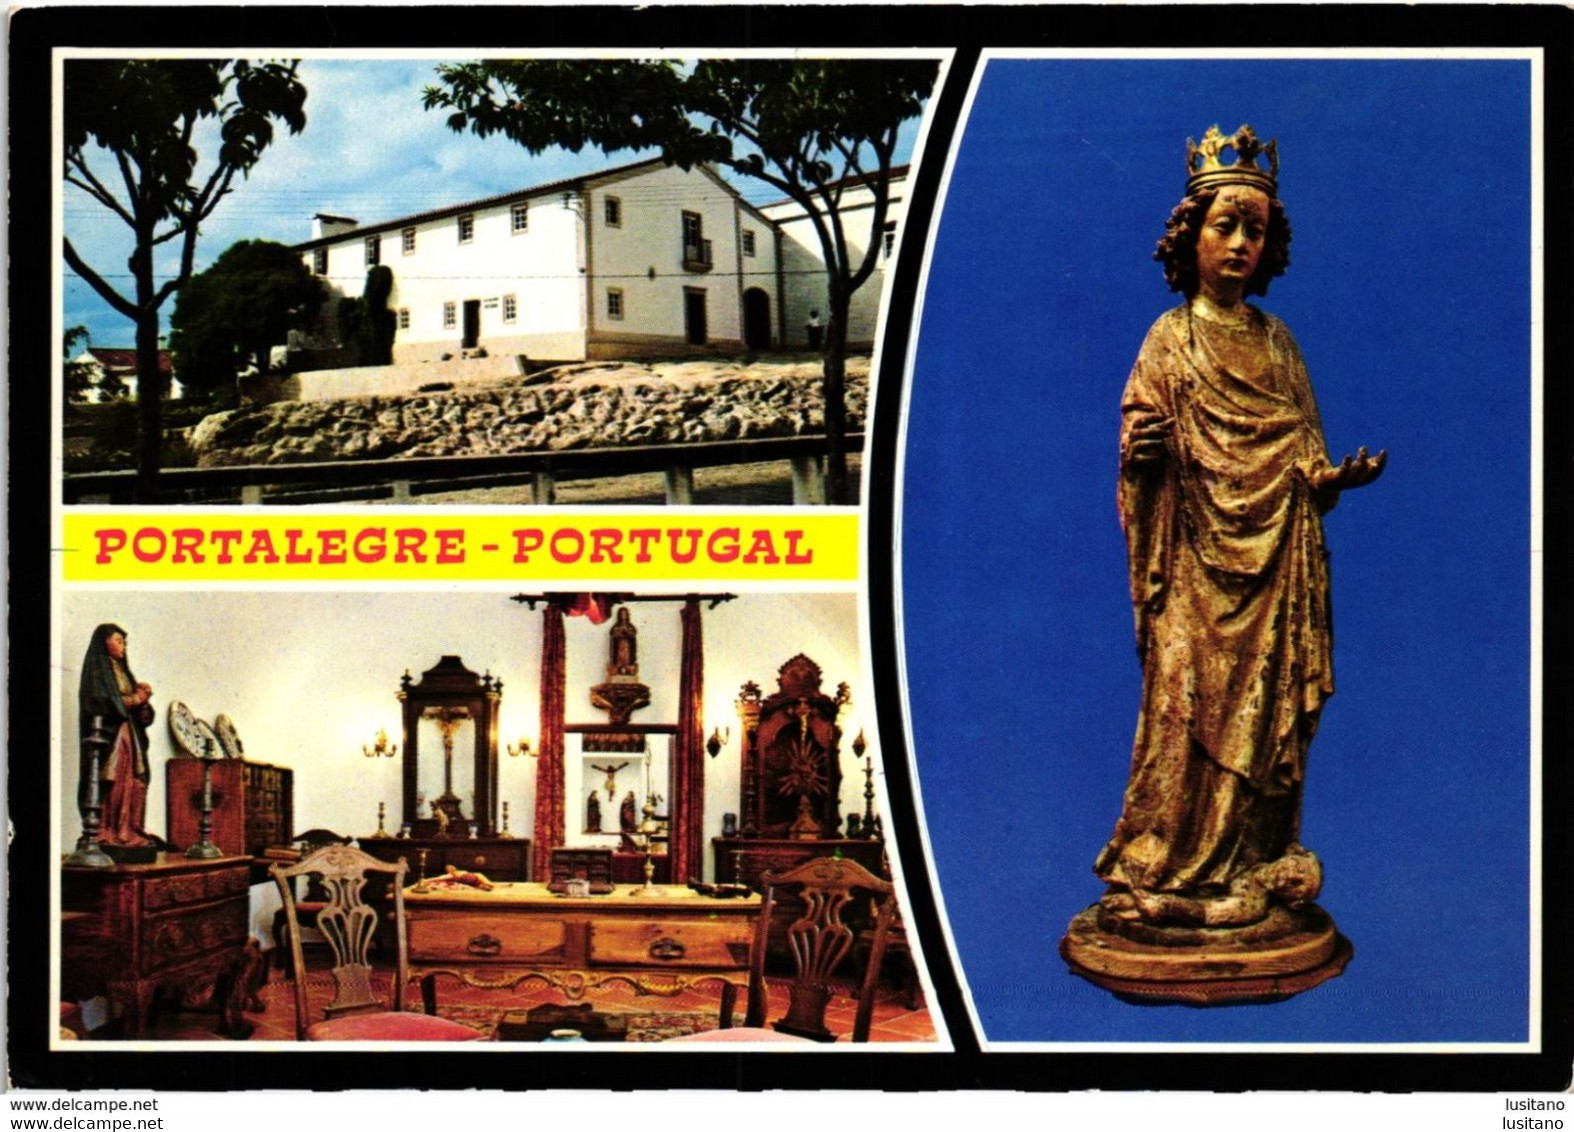 PORTALEGRE - CASA MUSEU JOSE REGIO - IMAGE DE SAINTE CATHERINE ORIGINE FRANCE - PORTUGAL 1960S - Portalegre